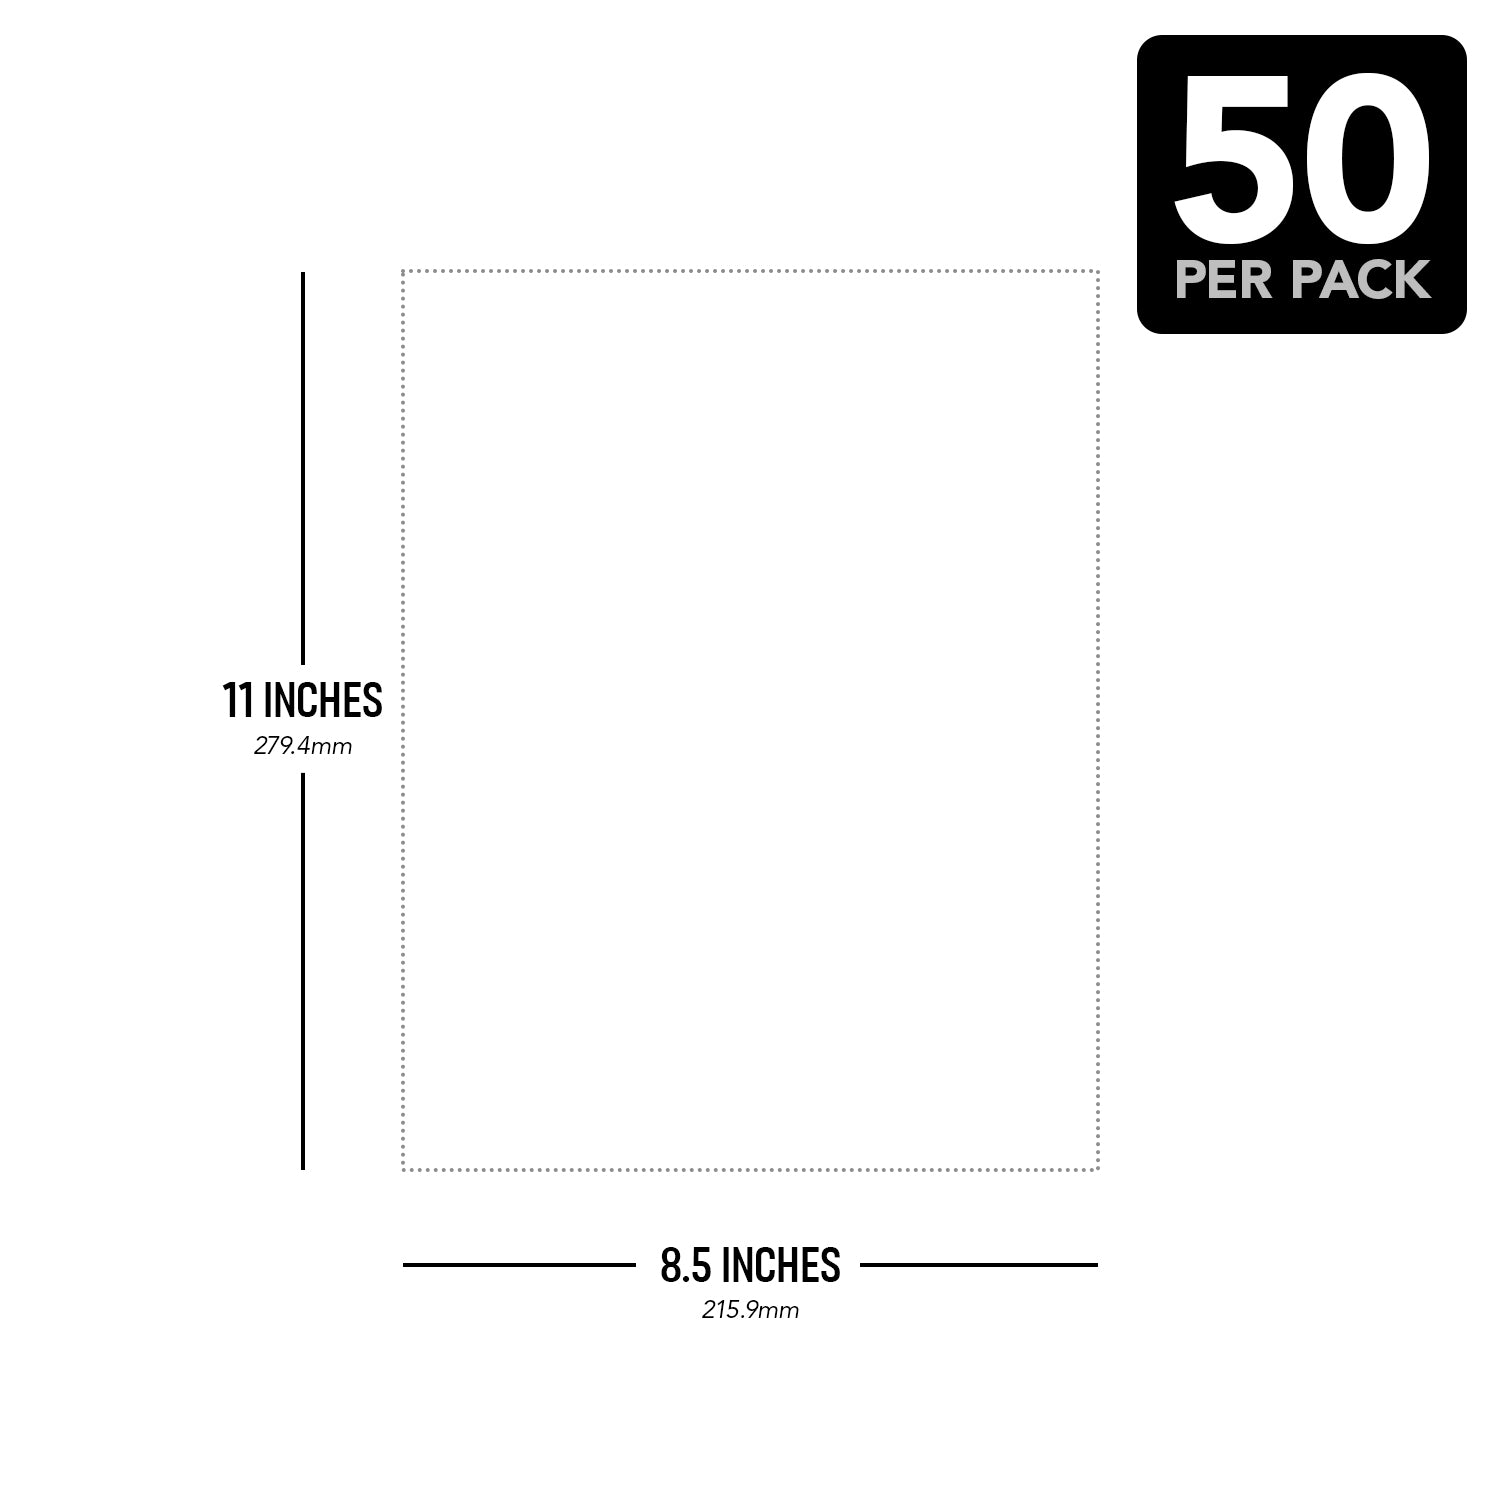 Paquete de 50 cartulinas blancas premium para todas tus necesidades de manualidades.